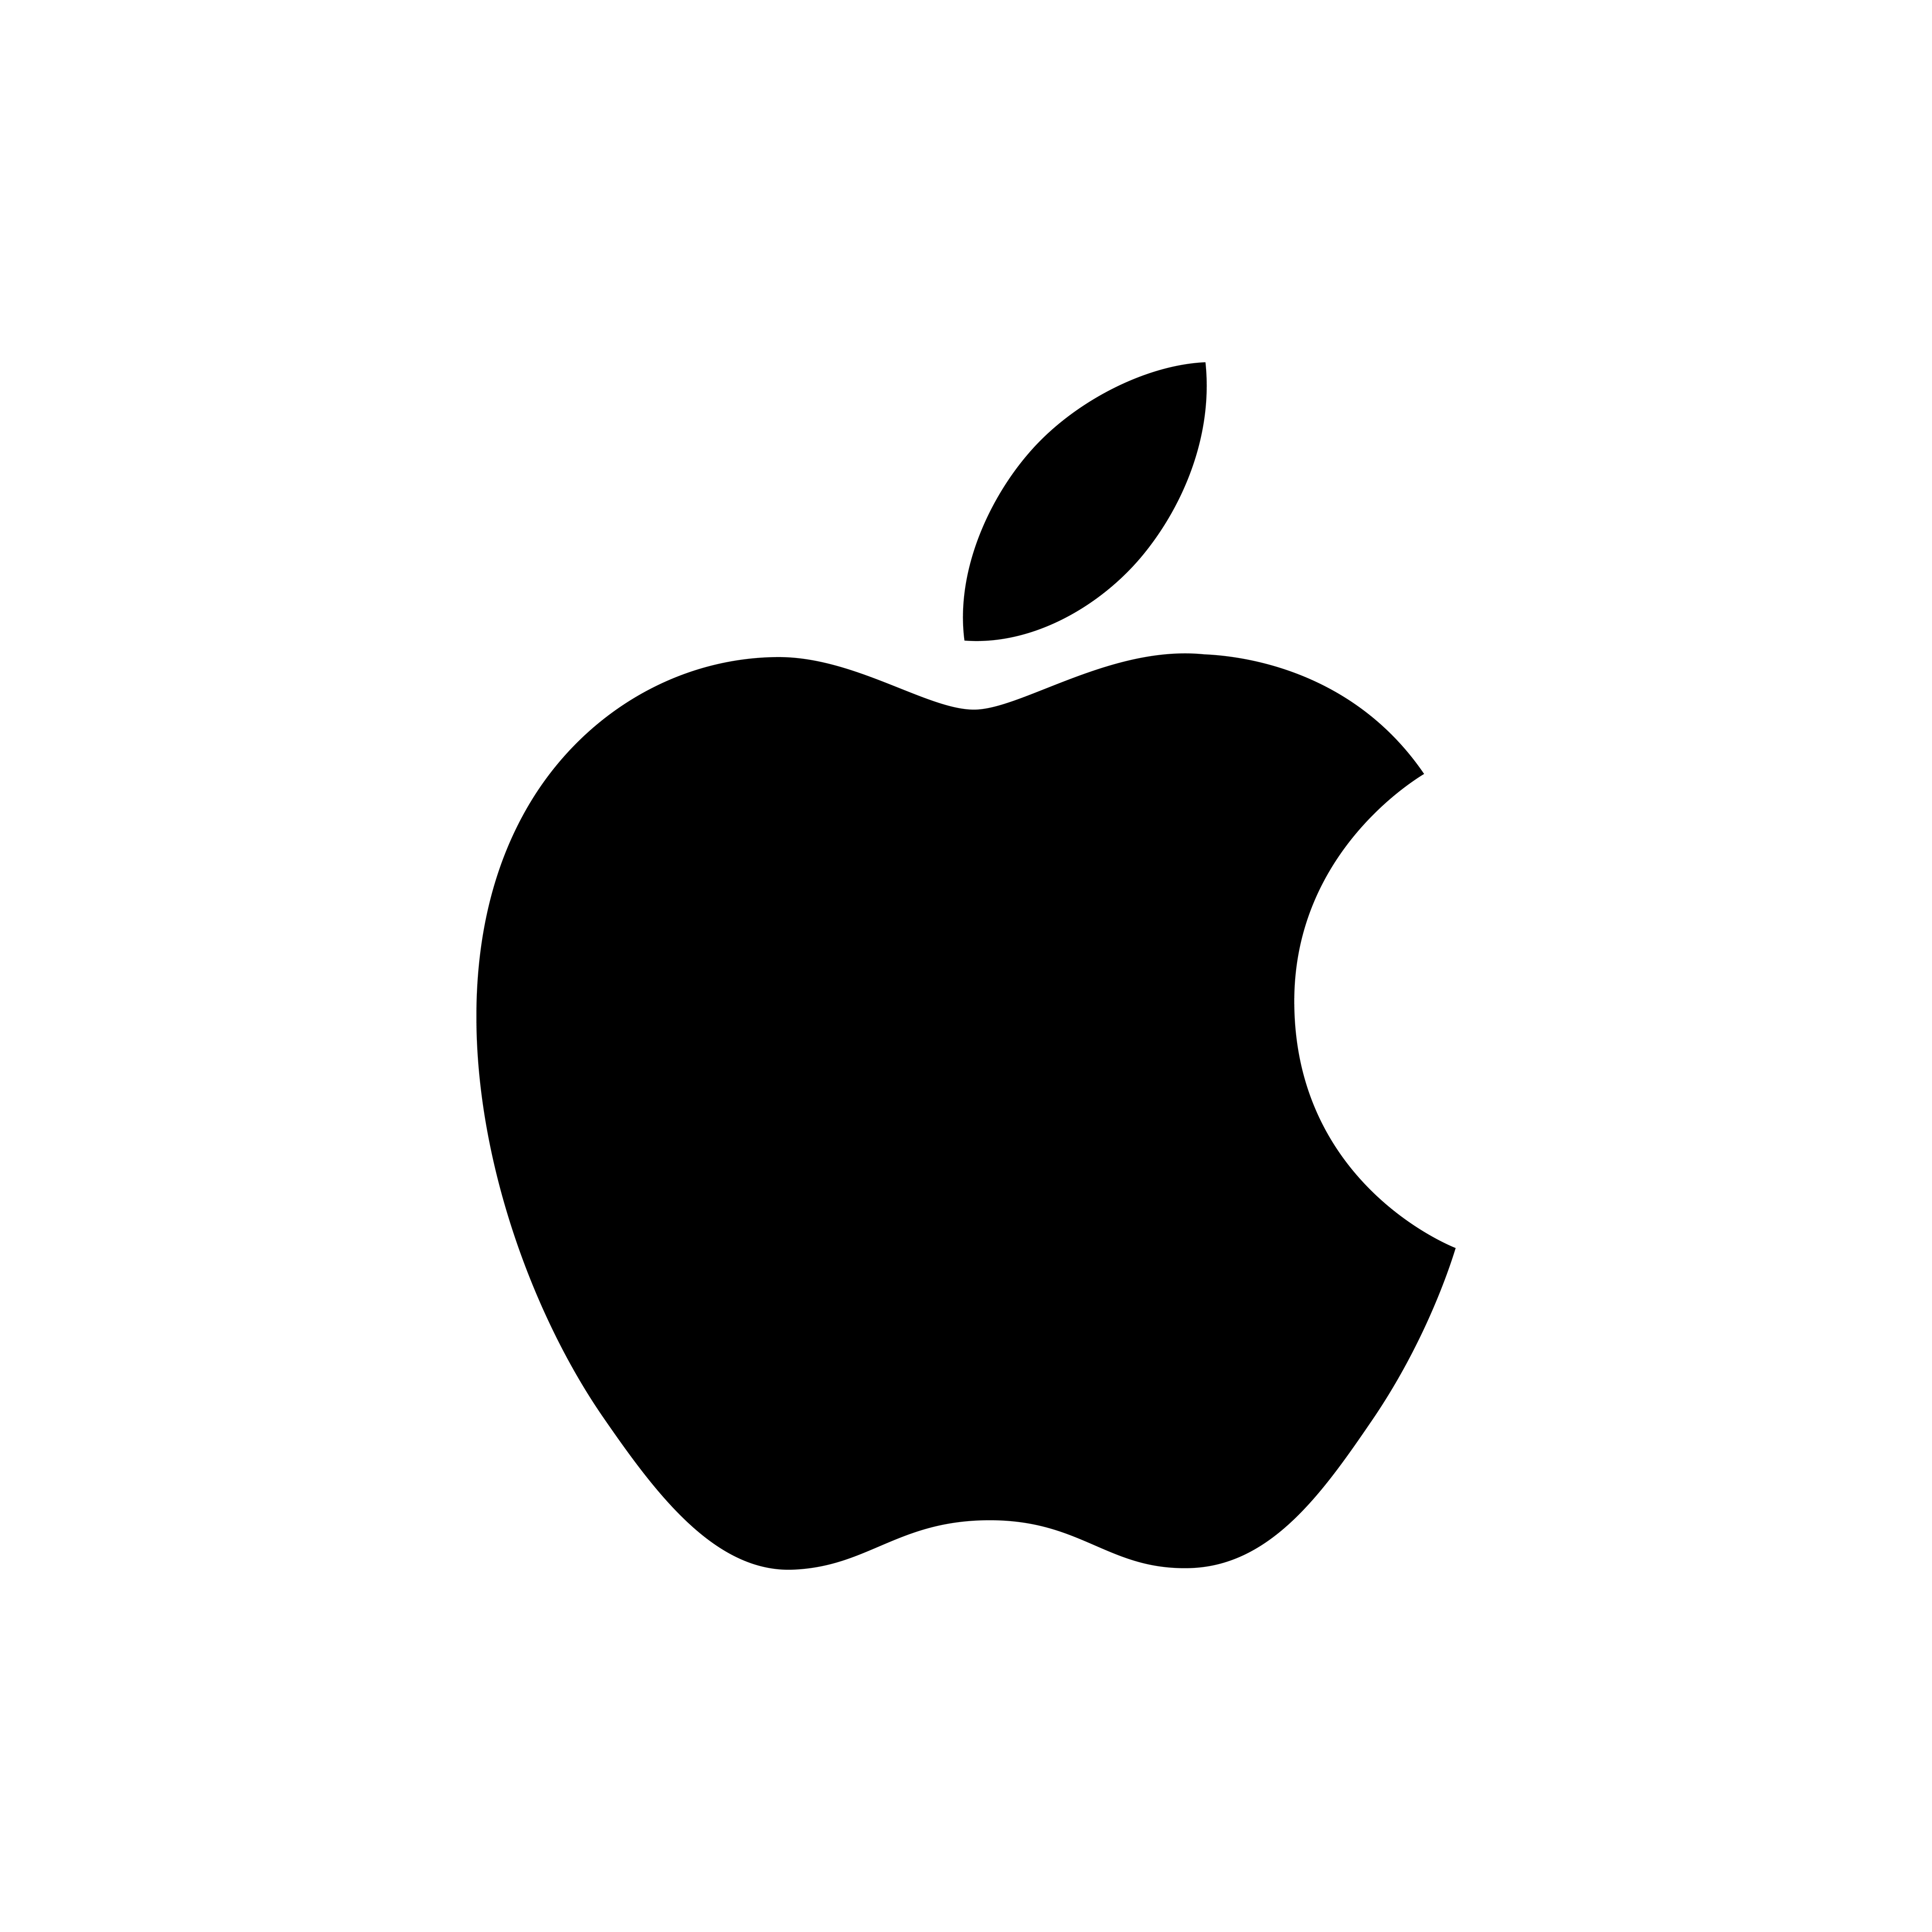 apple_logo_4096x4096_black